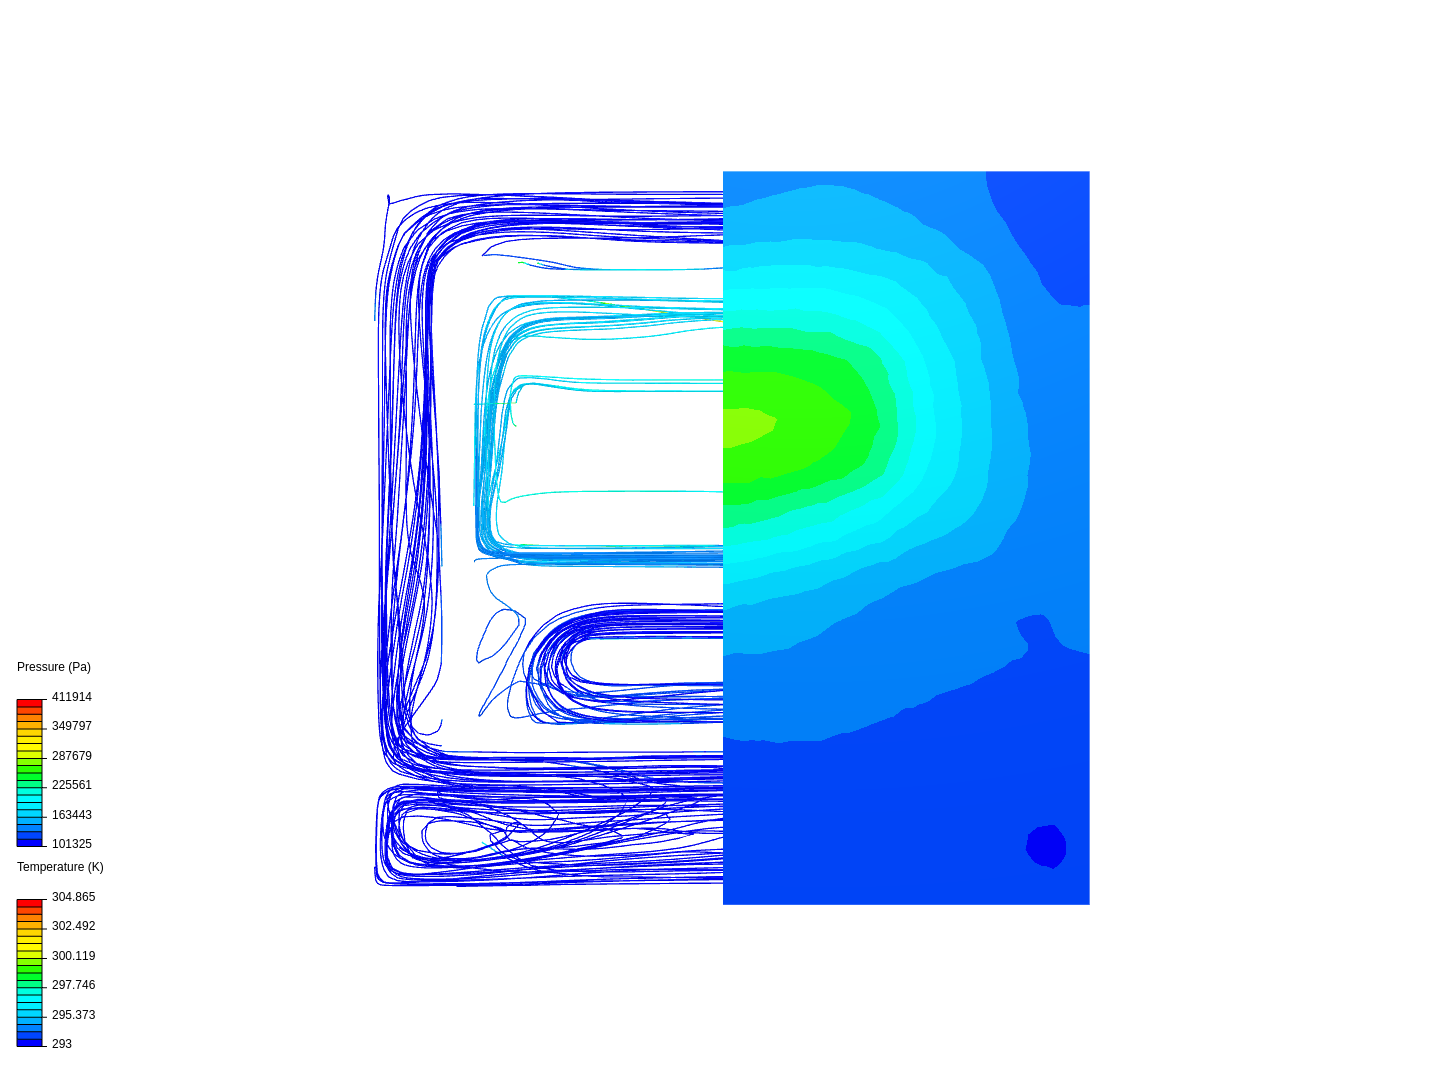 Water cooling Robin 600E - Heat Distribution and Maximum temp analysis image